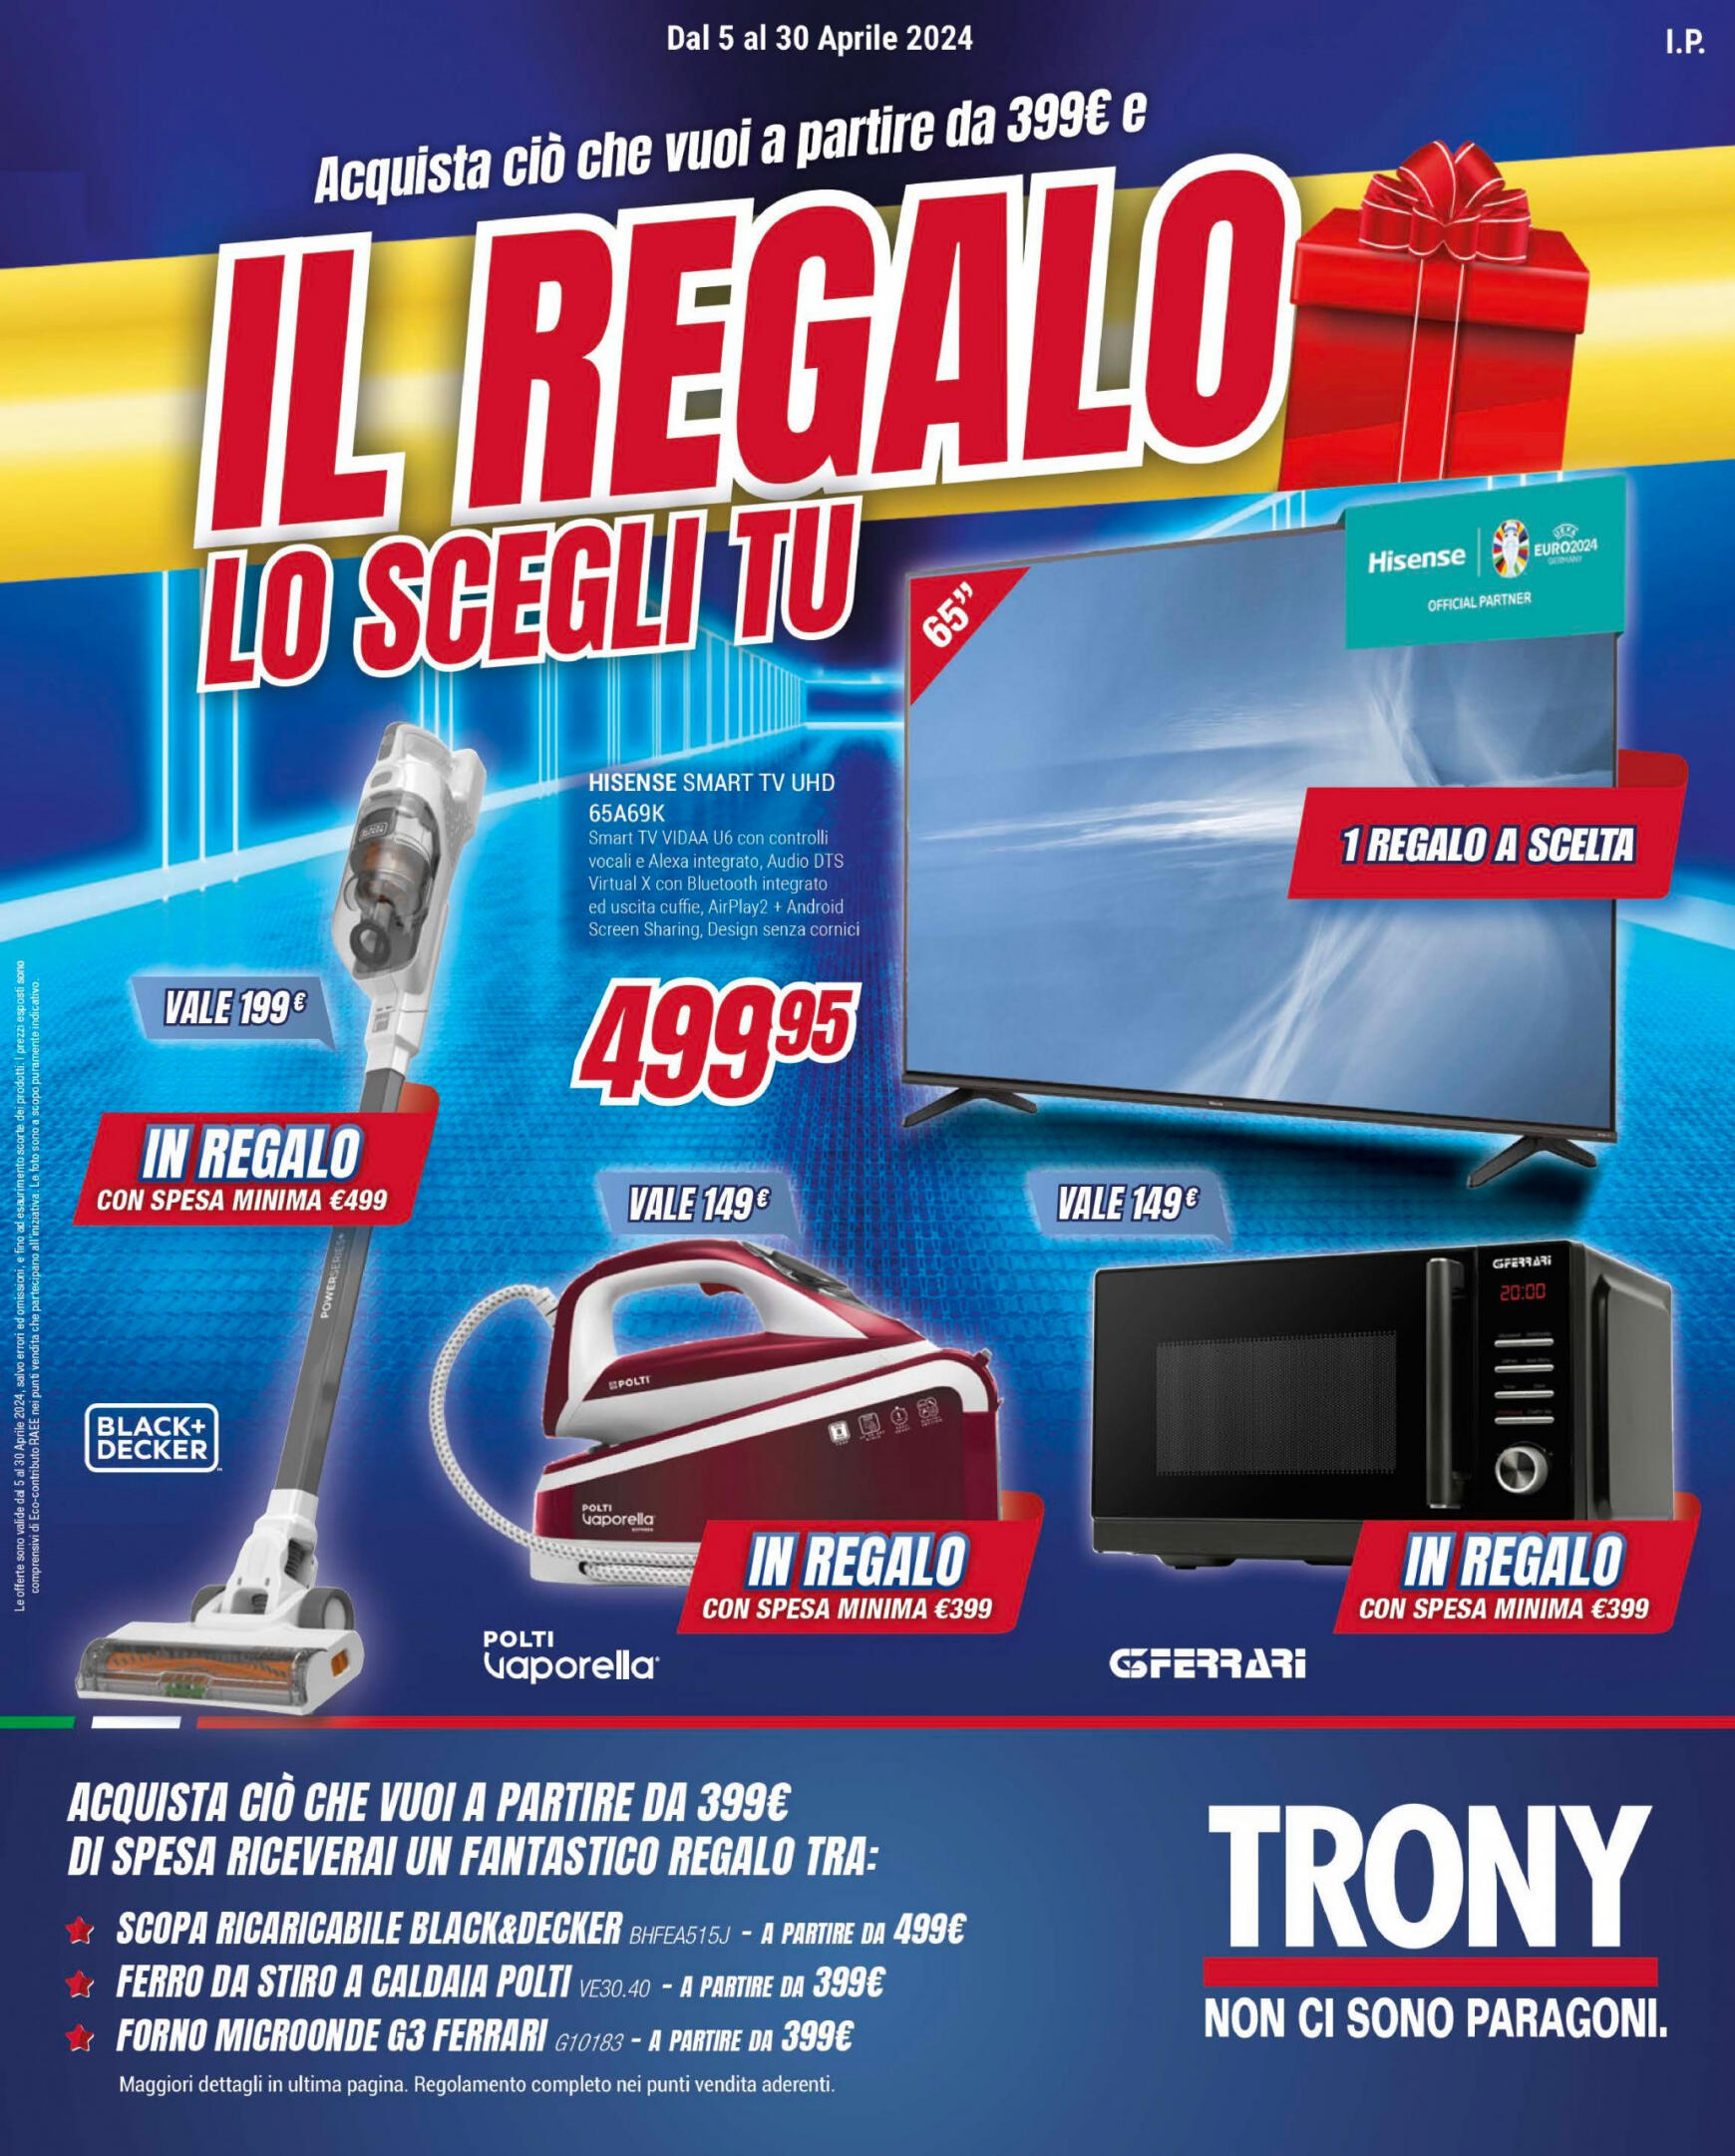 trony - Nuovo volantino Trony 05.04. - 30.04. - page: 1